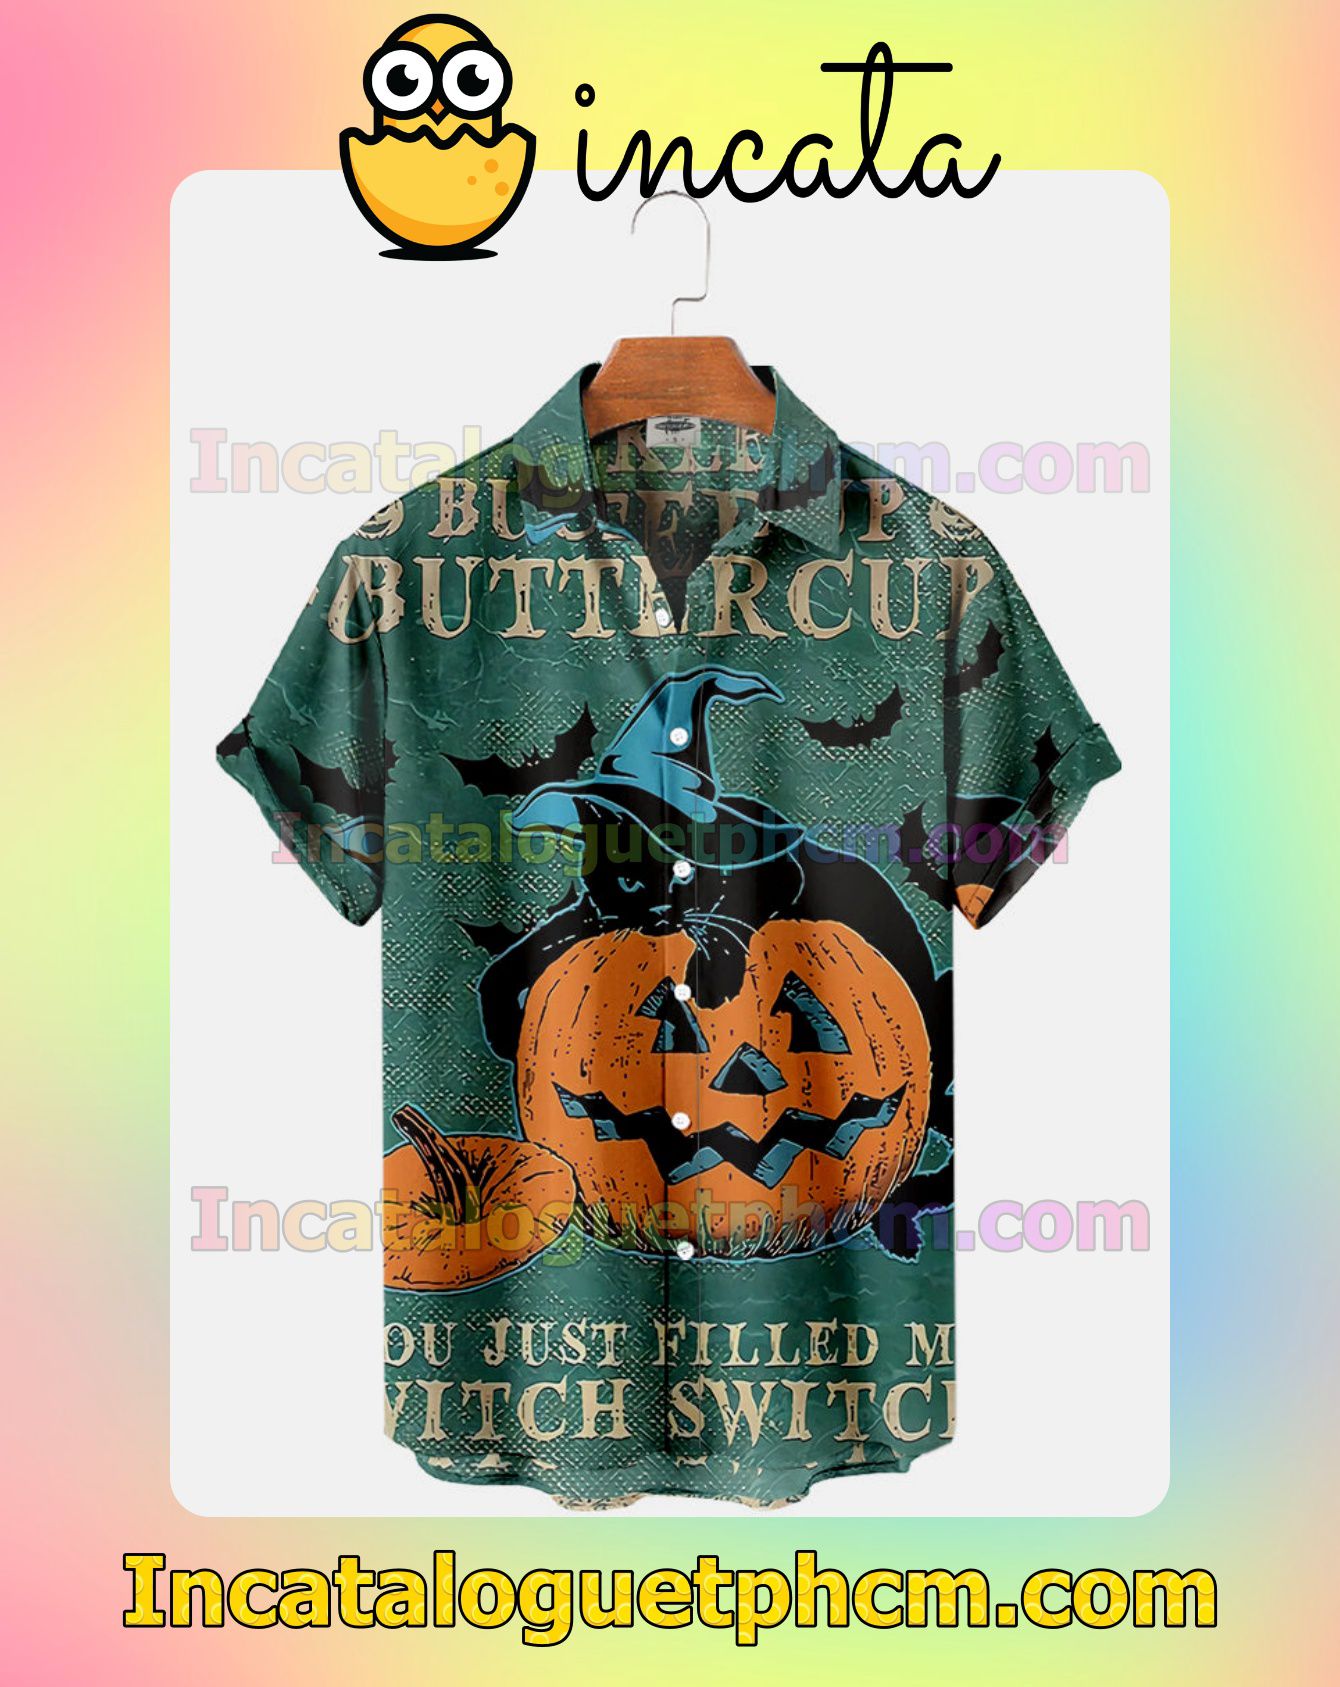 Drop Shipping Cat Pumpkin Buckle Up Buttercup You Just Filled Me Witch Switch Halloween Idea Shirt